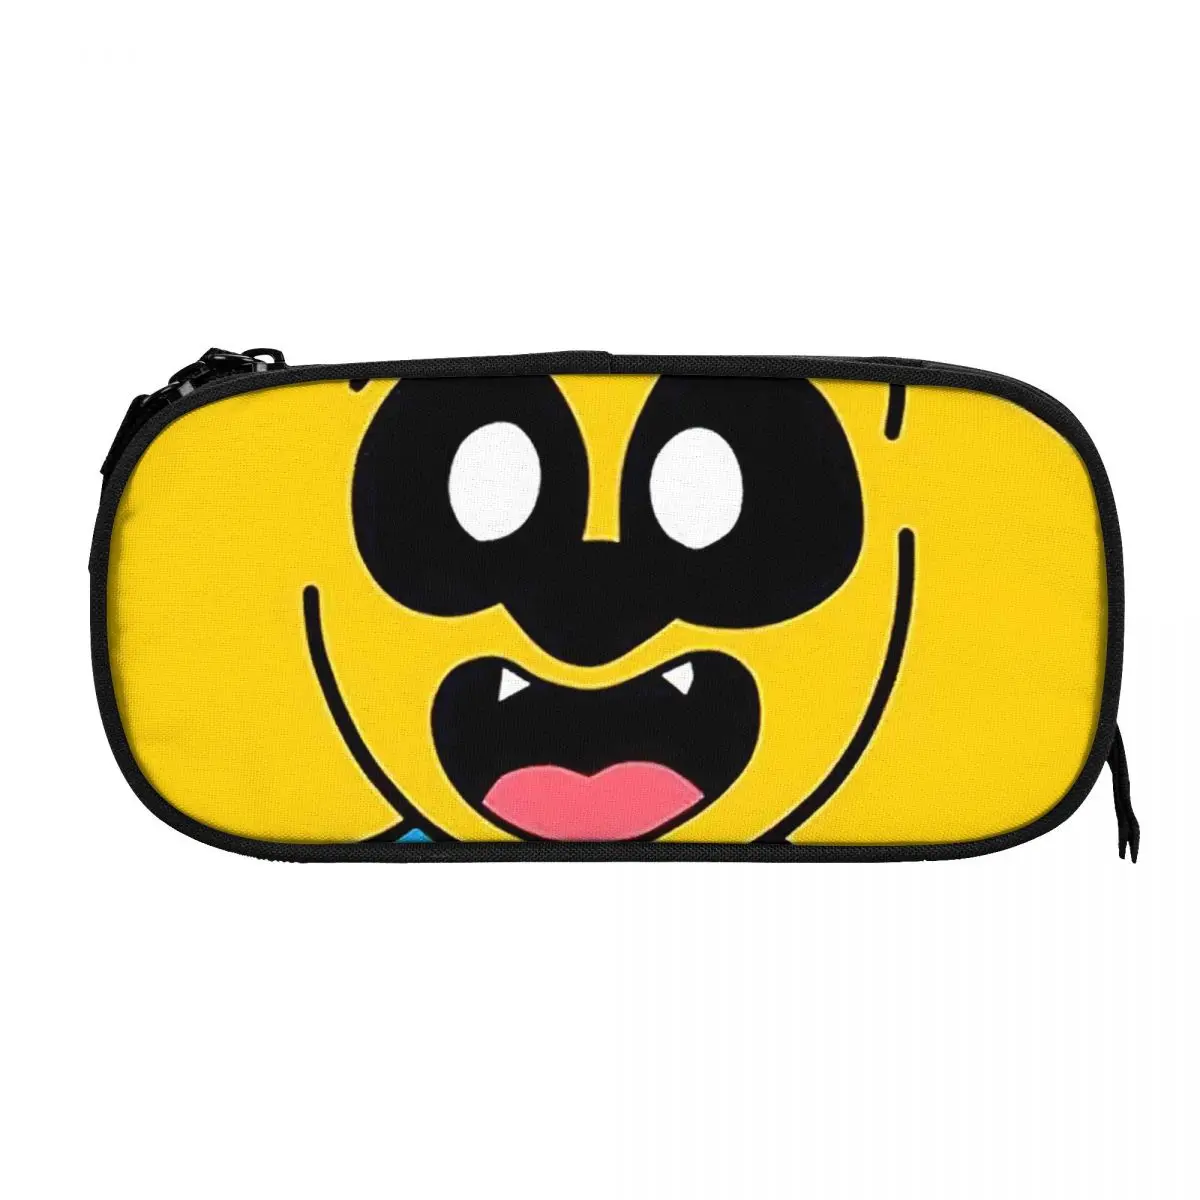 

Mikecrack Pen Box Student School Anime Zipper Pen Bag Child Stationery Bag pencase Gift